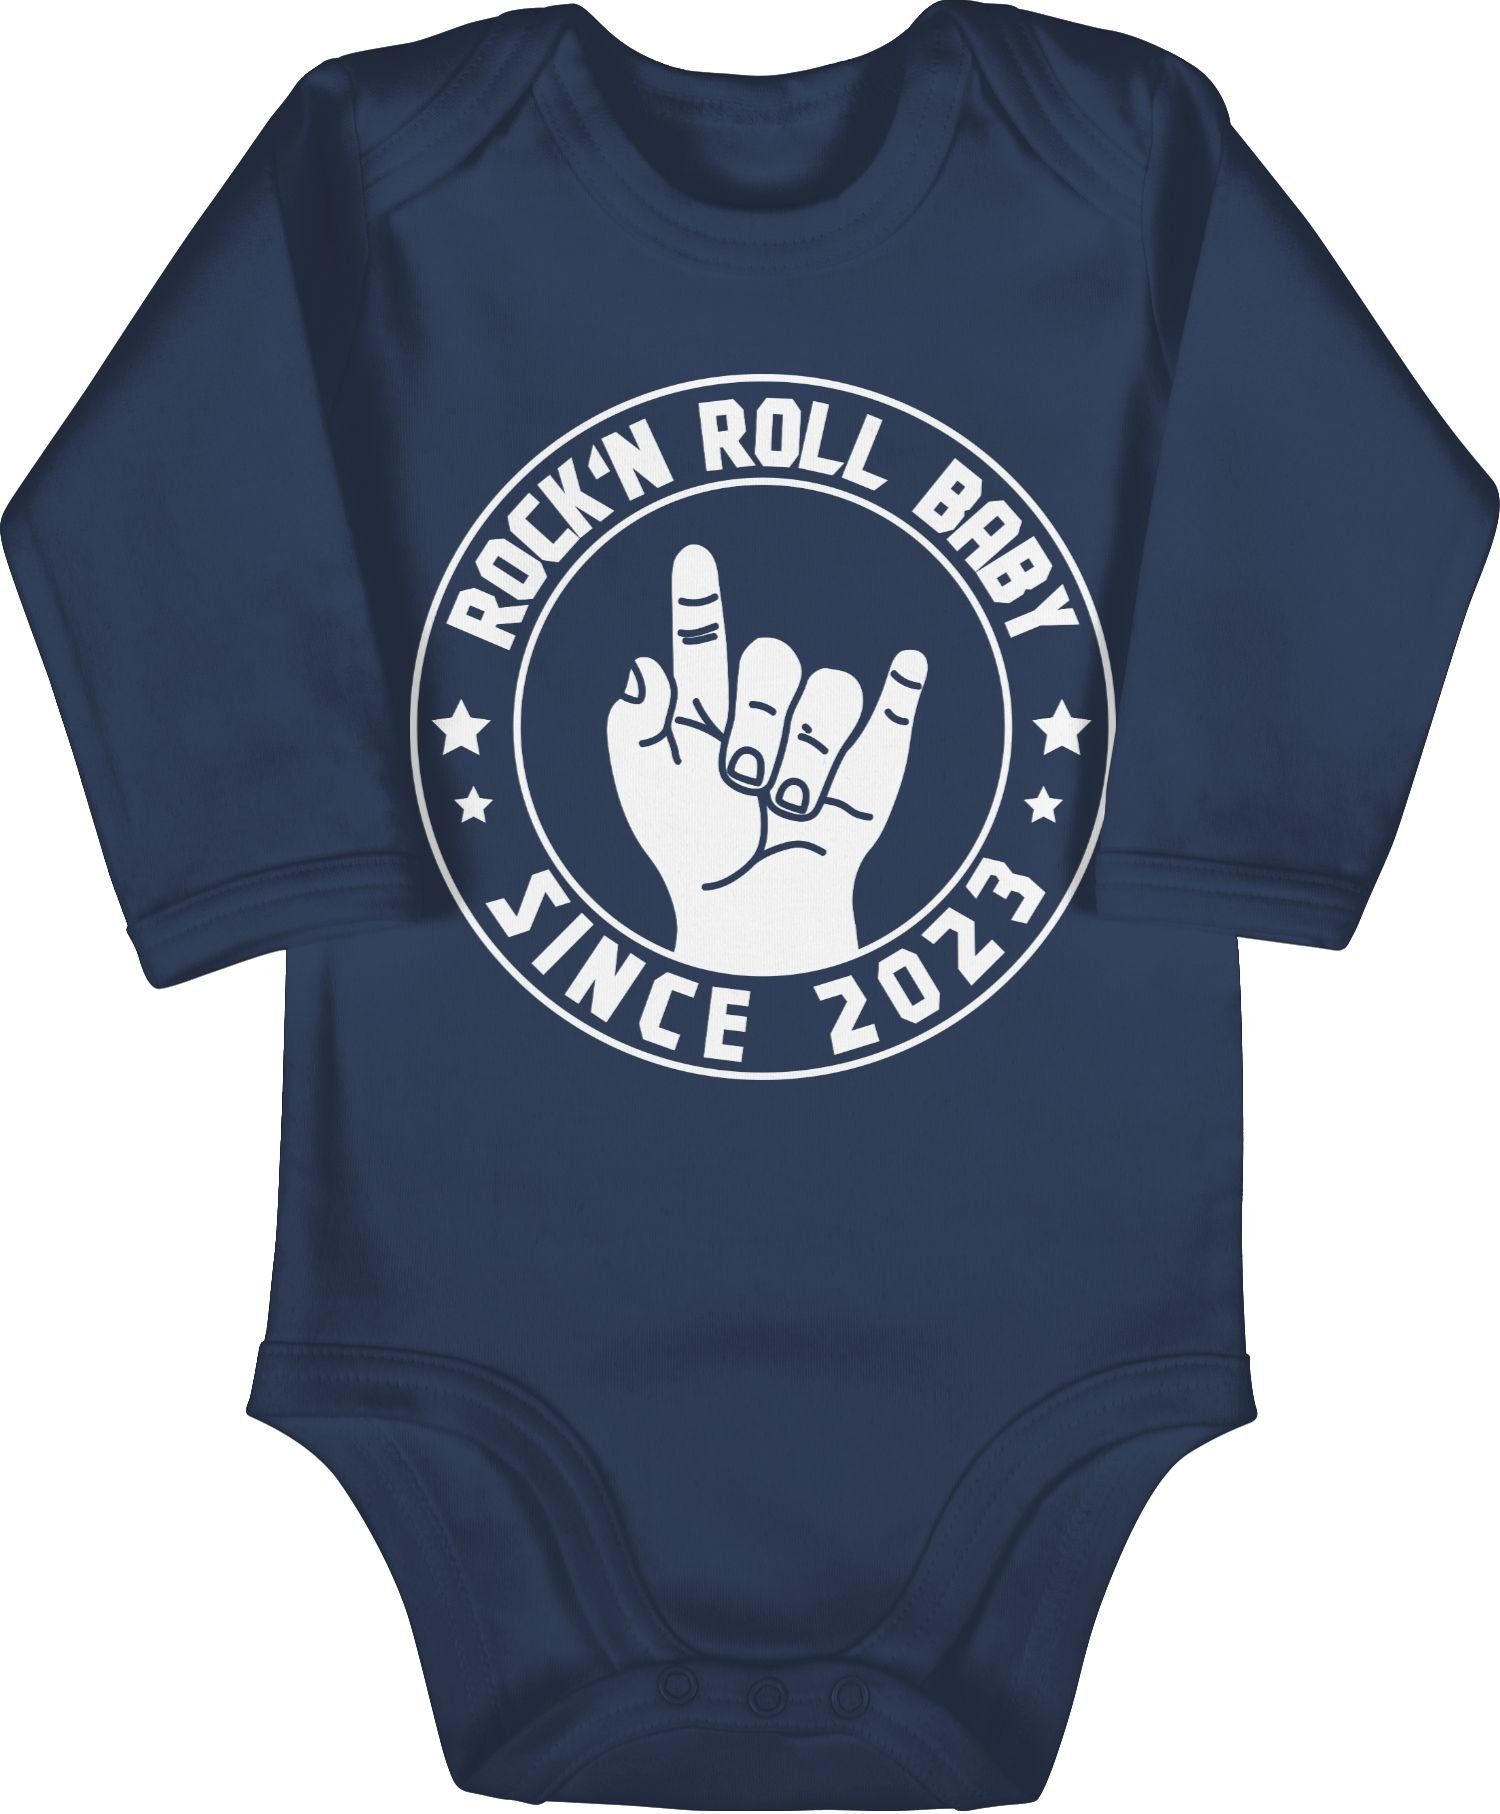 Navy Blau Shirtracer Baby Roll 3 Baby since Rock'n 2023 Sprüche Shirtbody